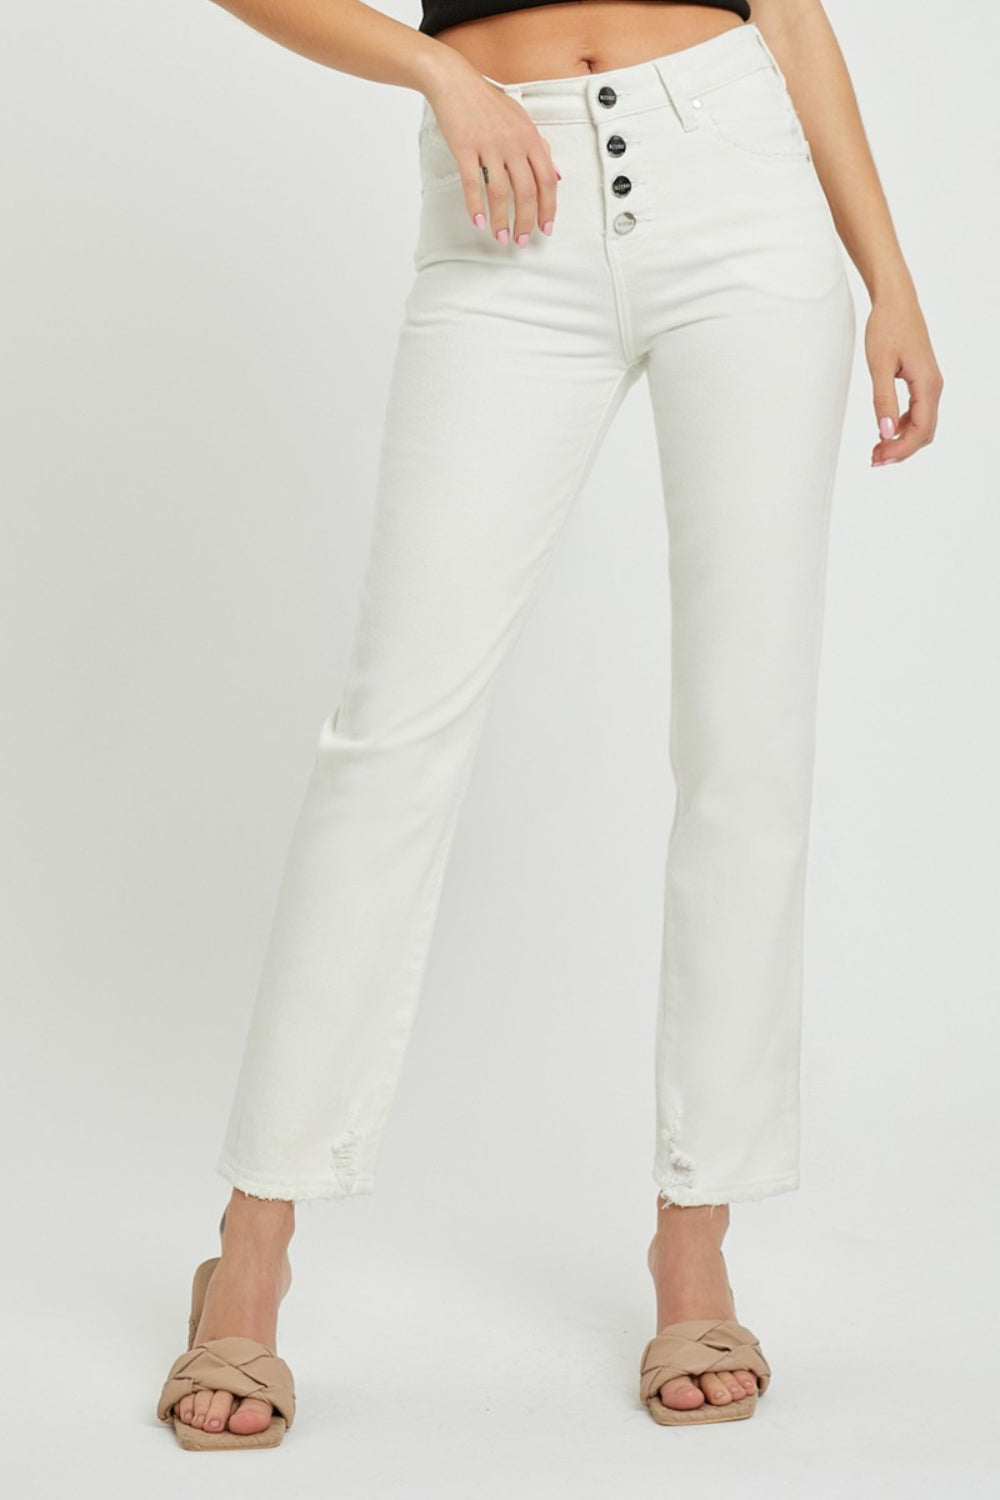 RISEN Tummy Control White Jeans - Inspired Eye Boutique